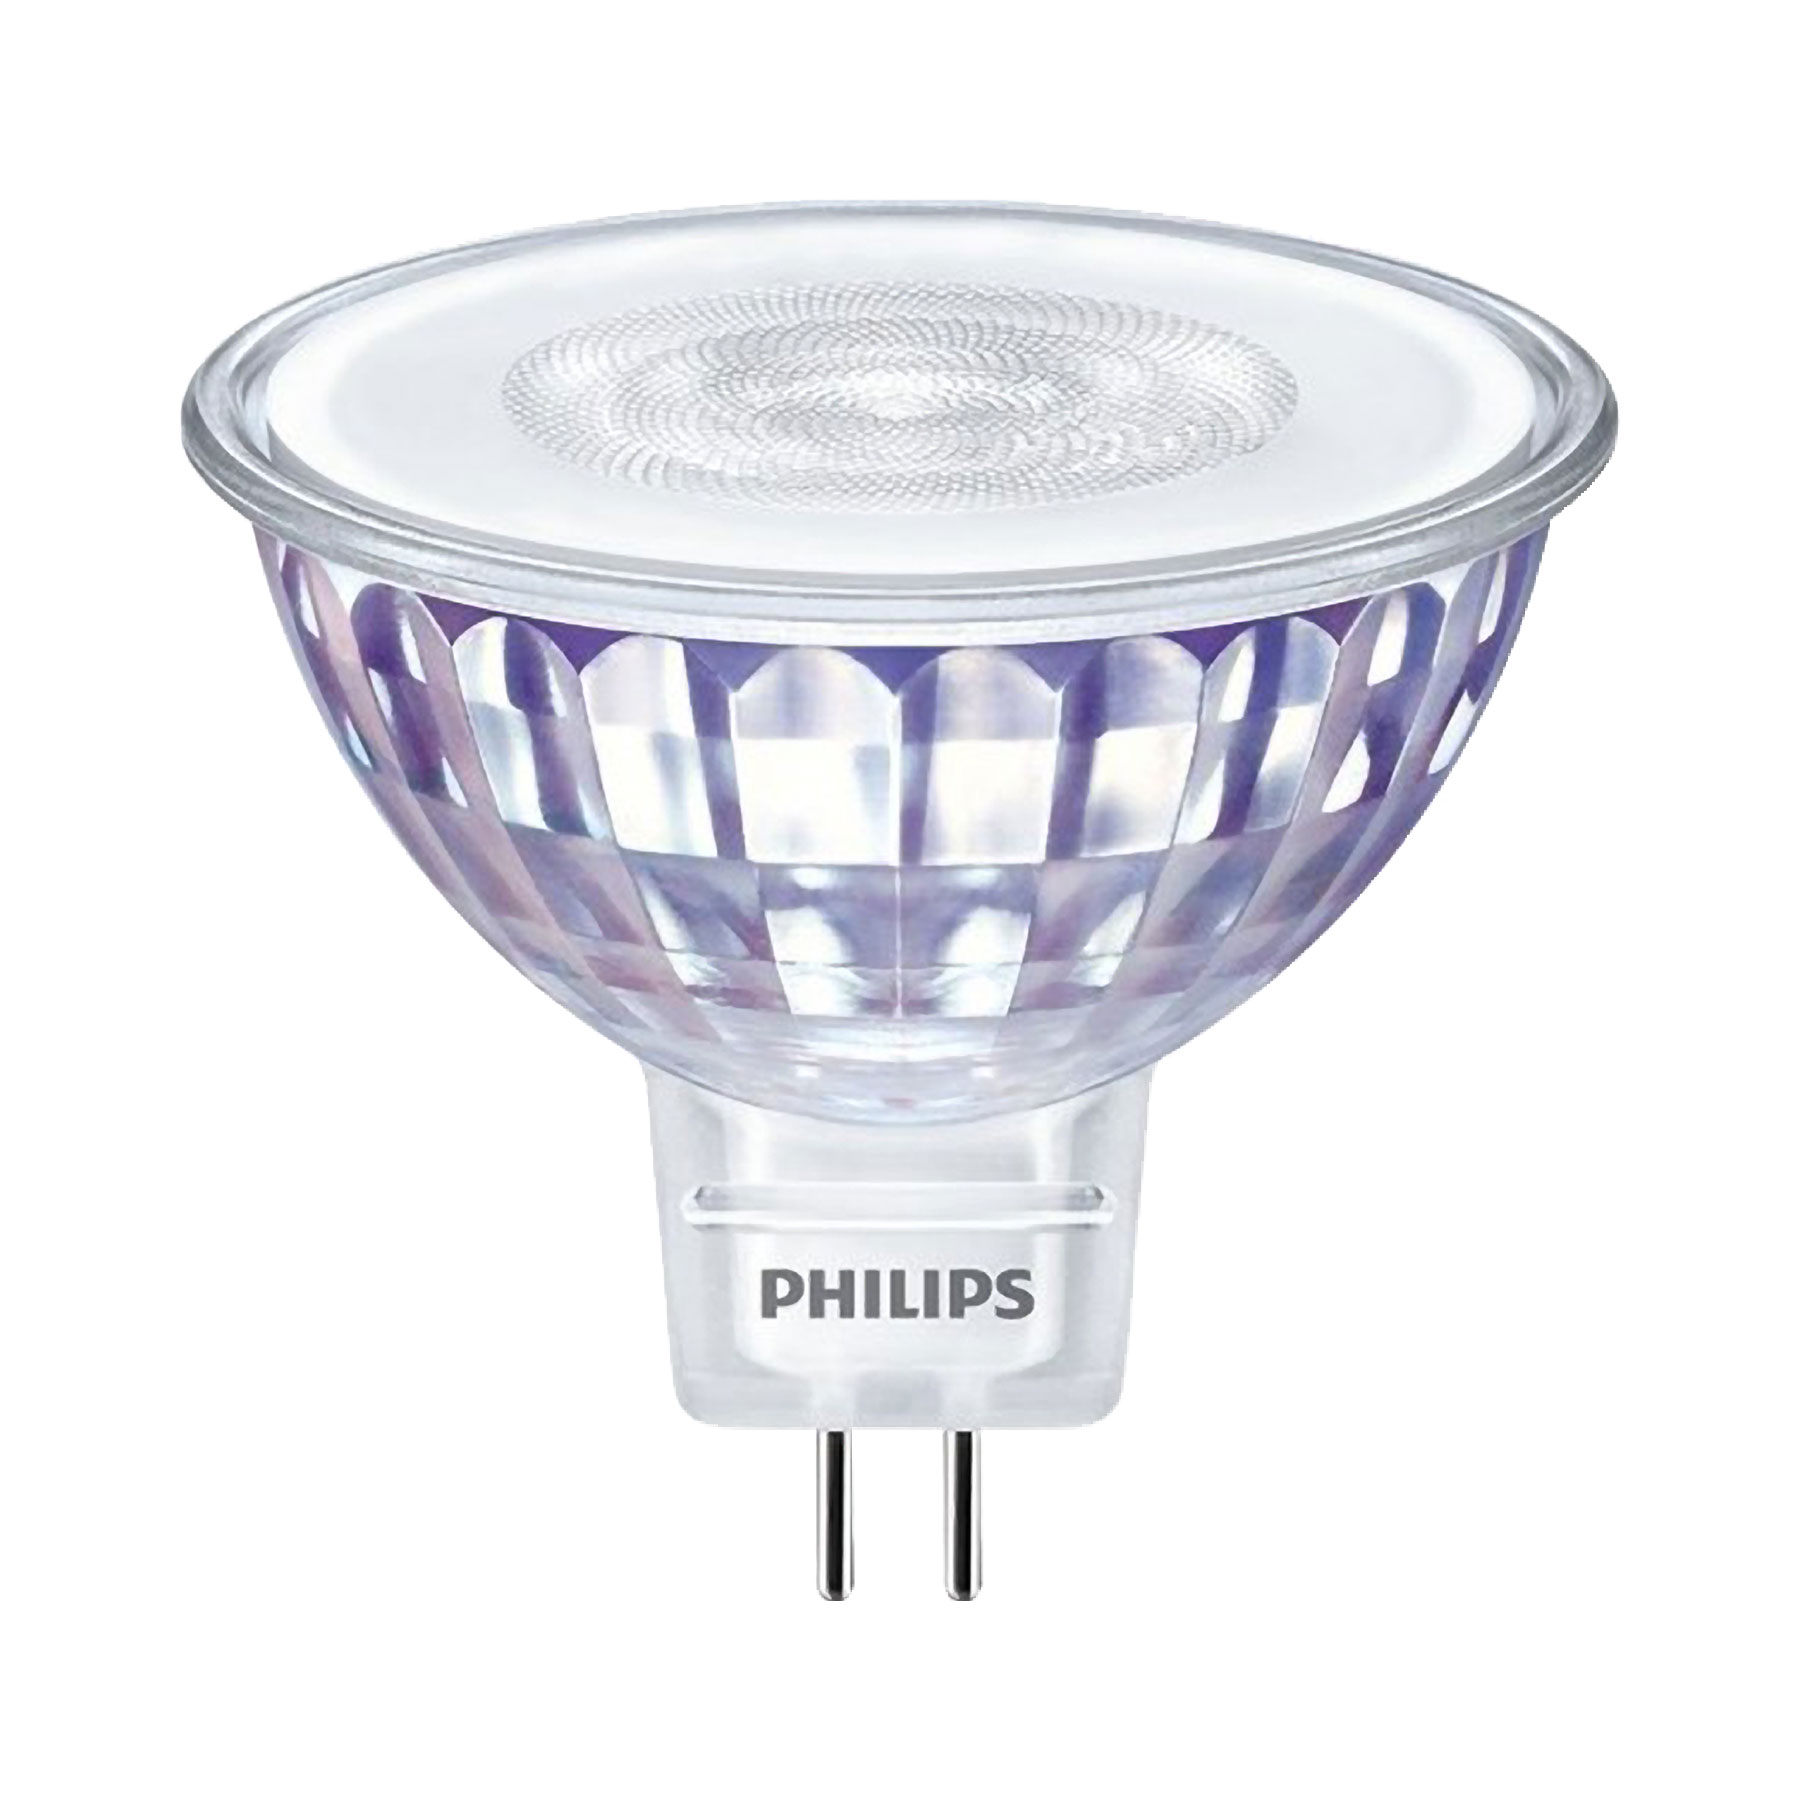 Euri Lighting MR16 LED Bulb - 7W - Dimmable